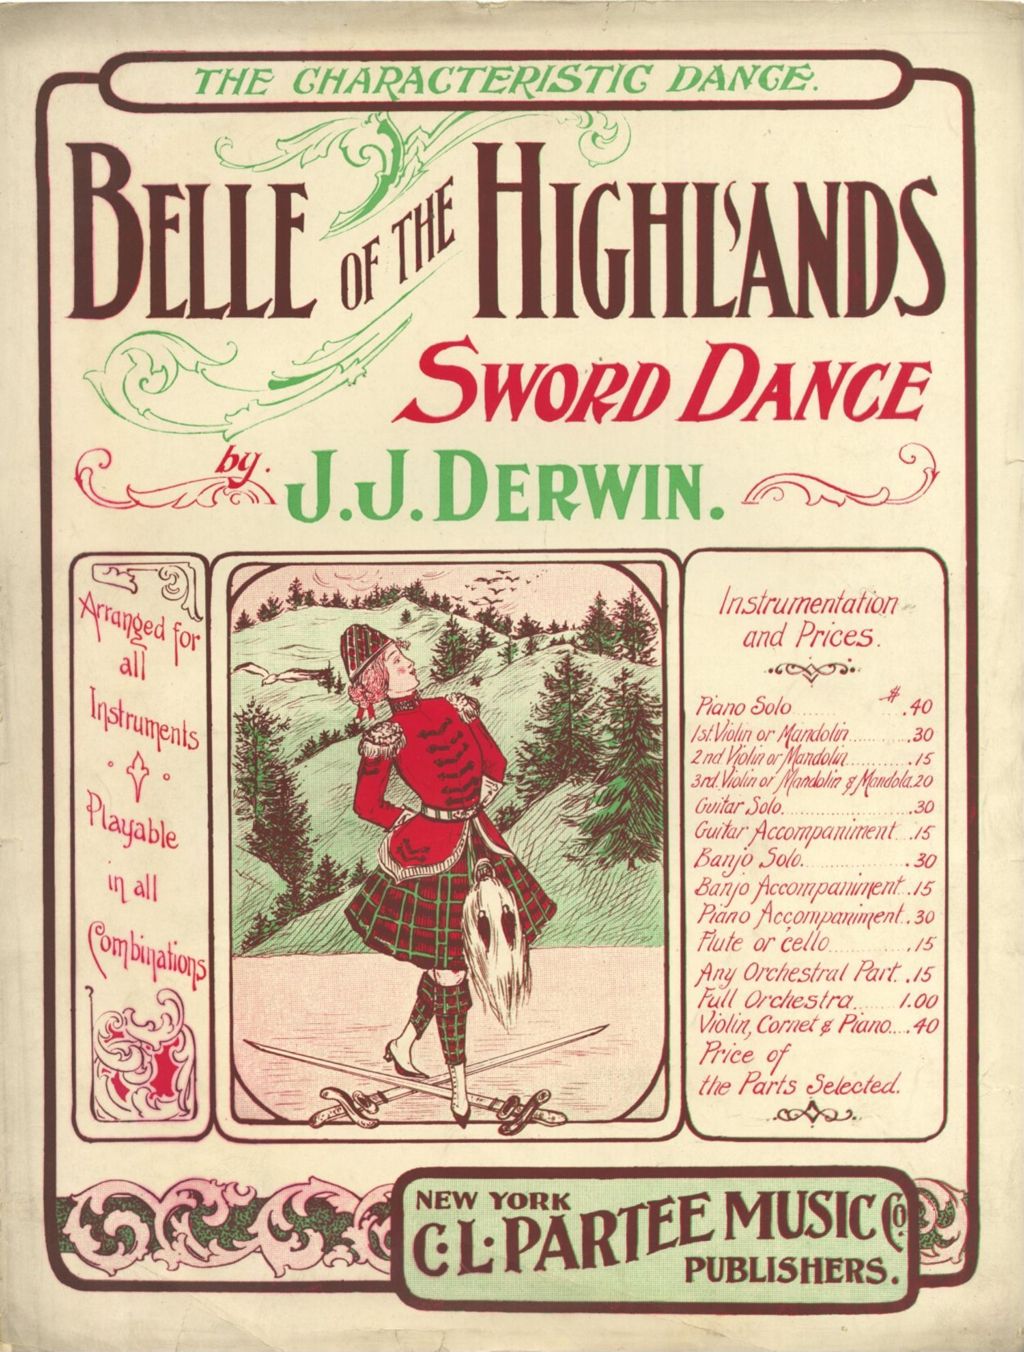 Miniature of Belle of the Highlands (Sword Dance)